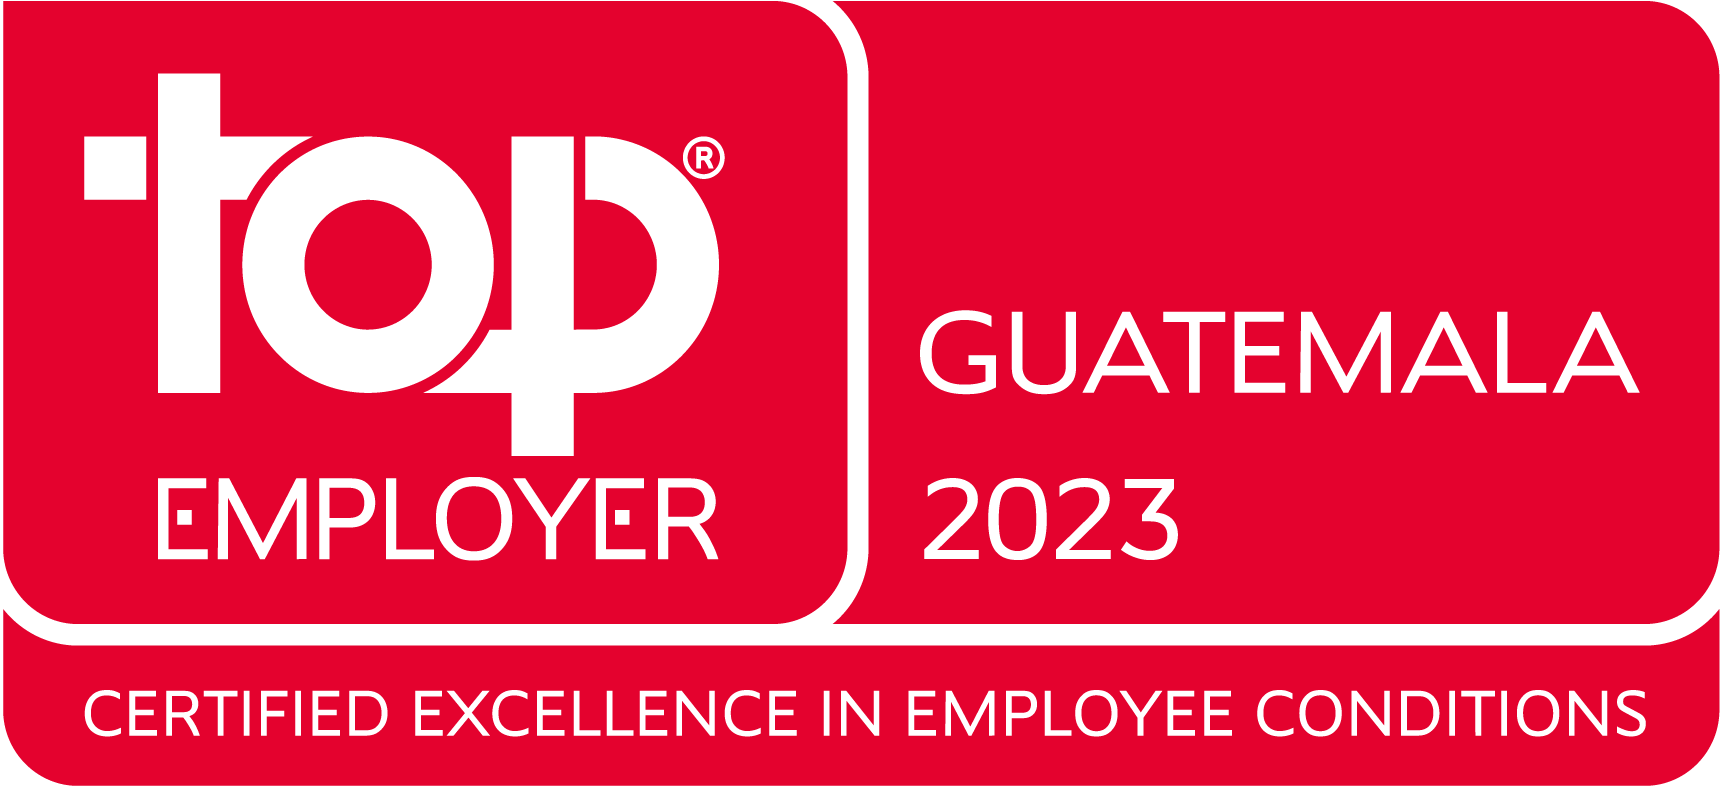 Top employer global 2023